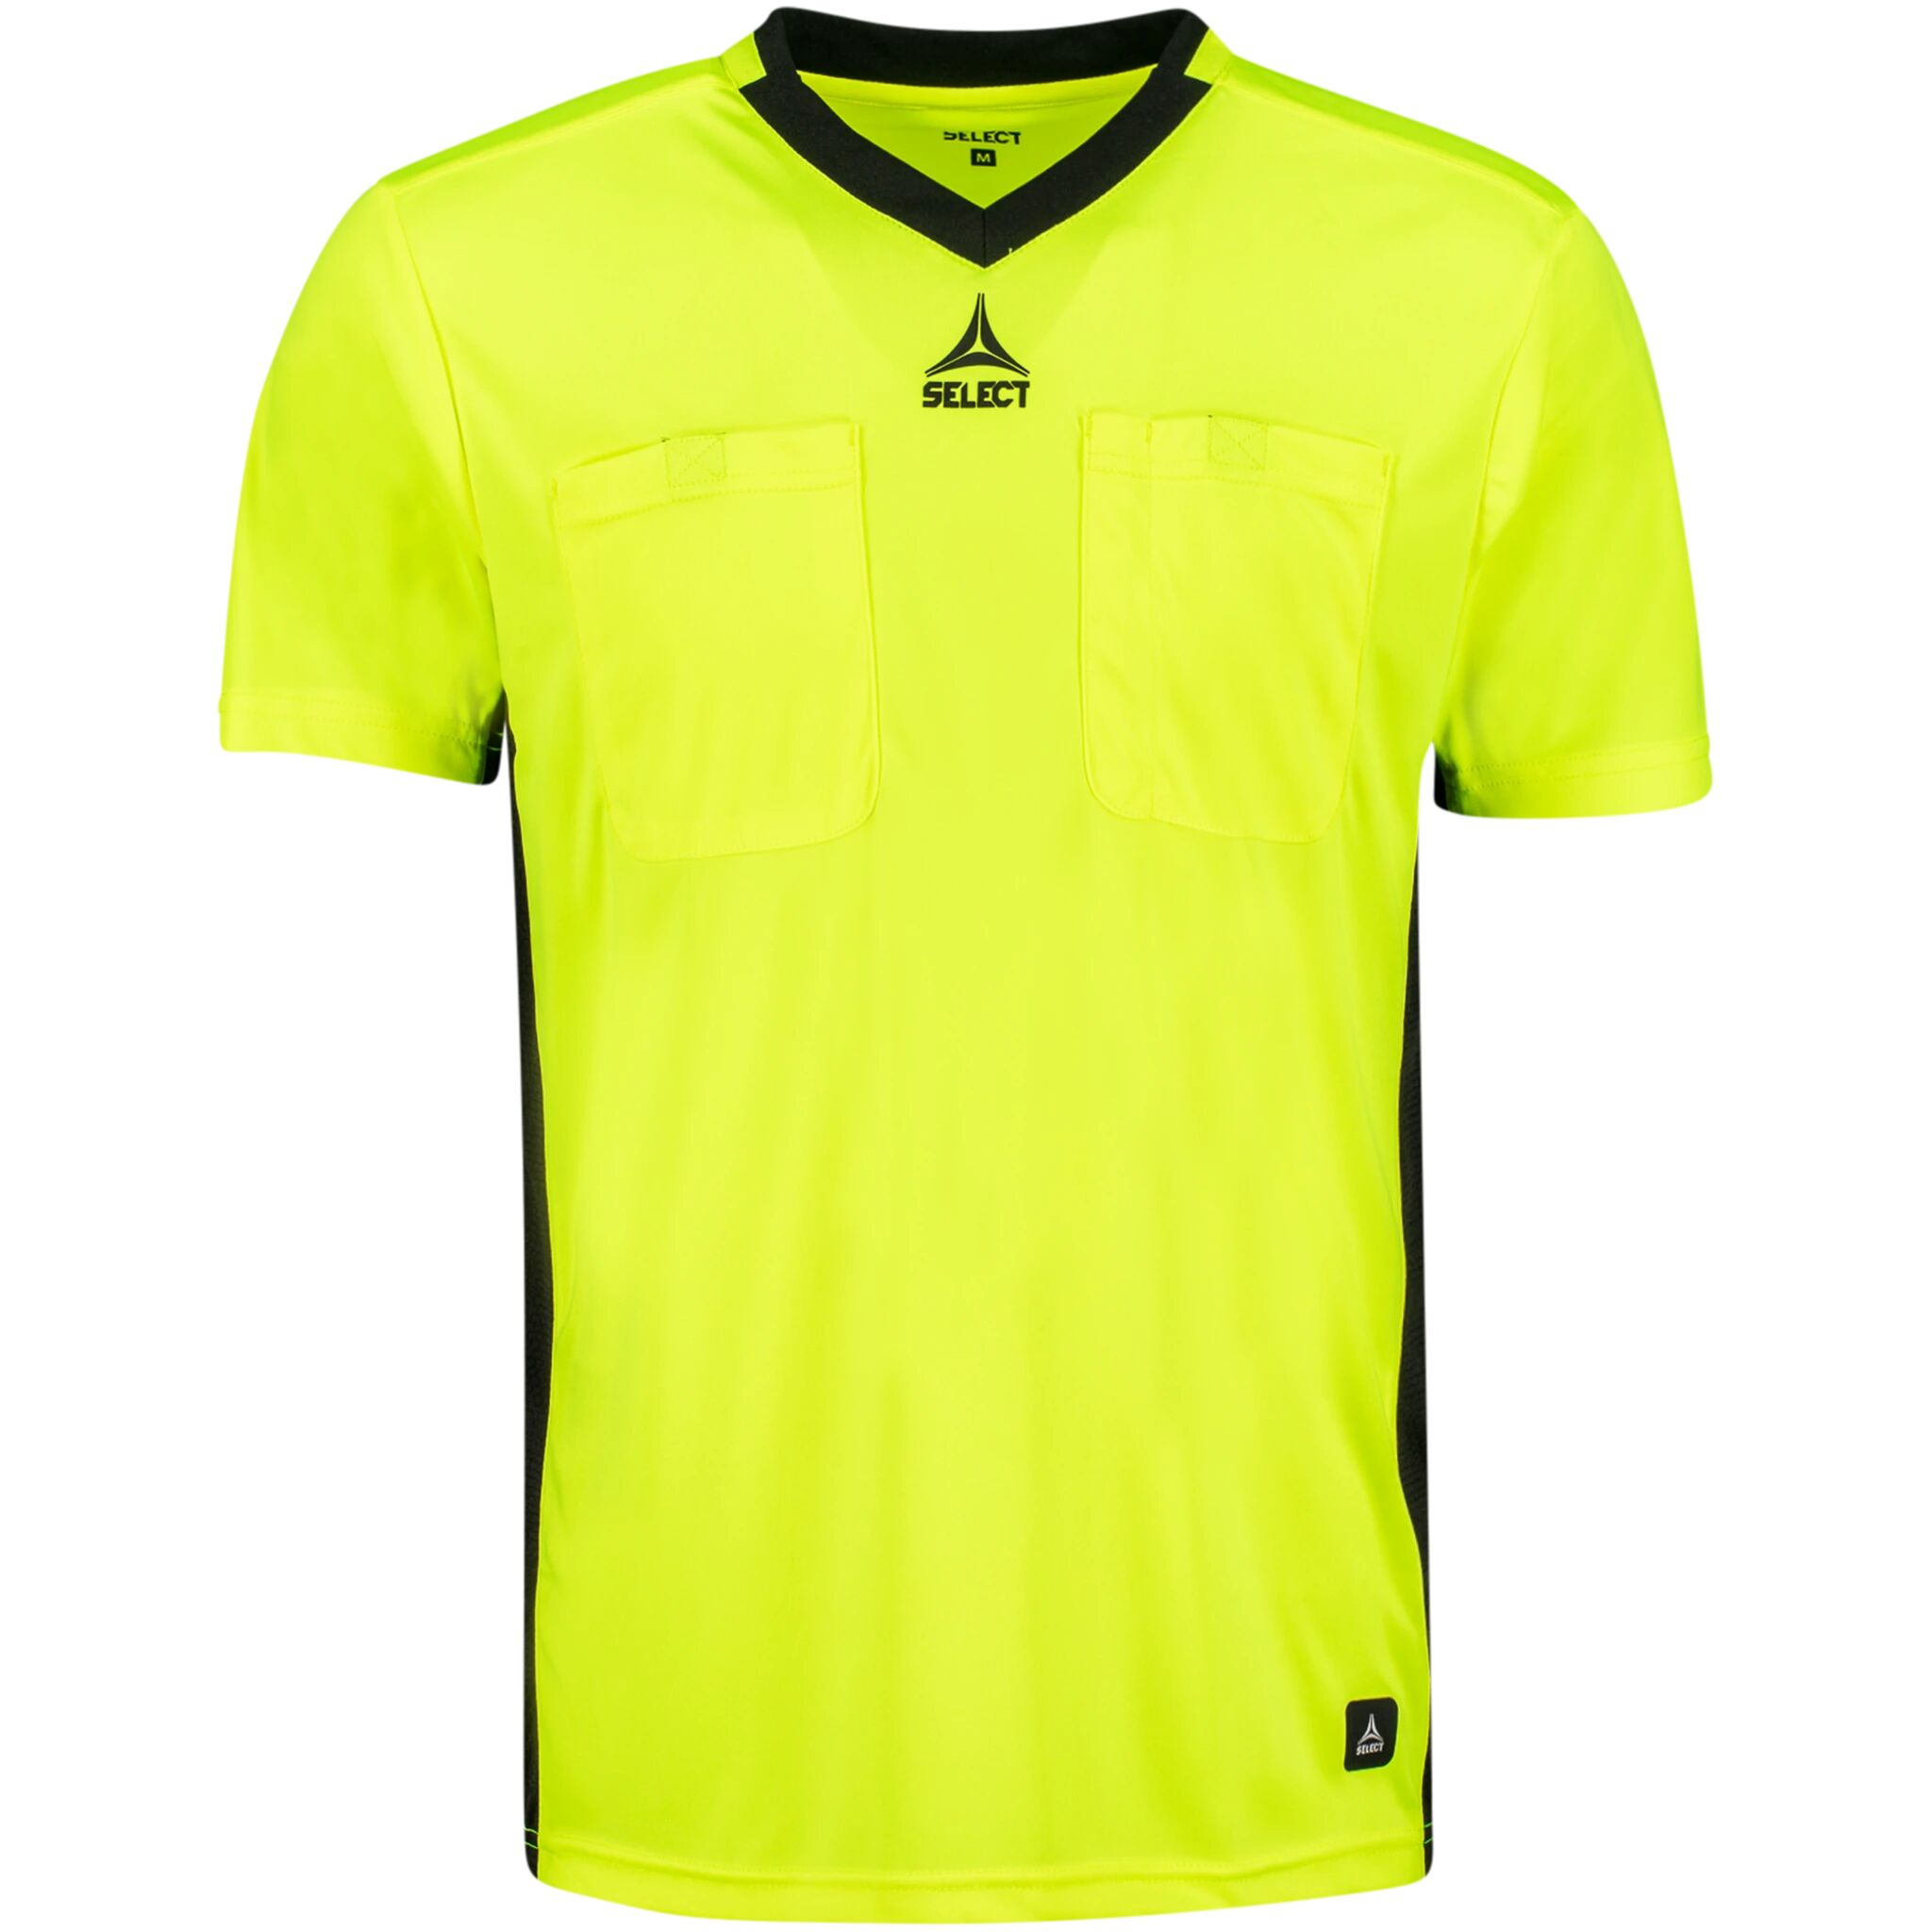 Select Referee shirt S/S v21, dommerdrakt senior XL Yellow/Black